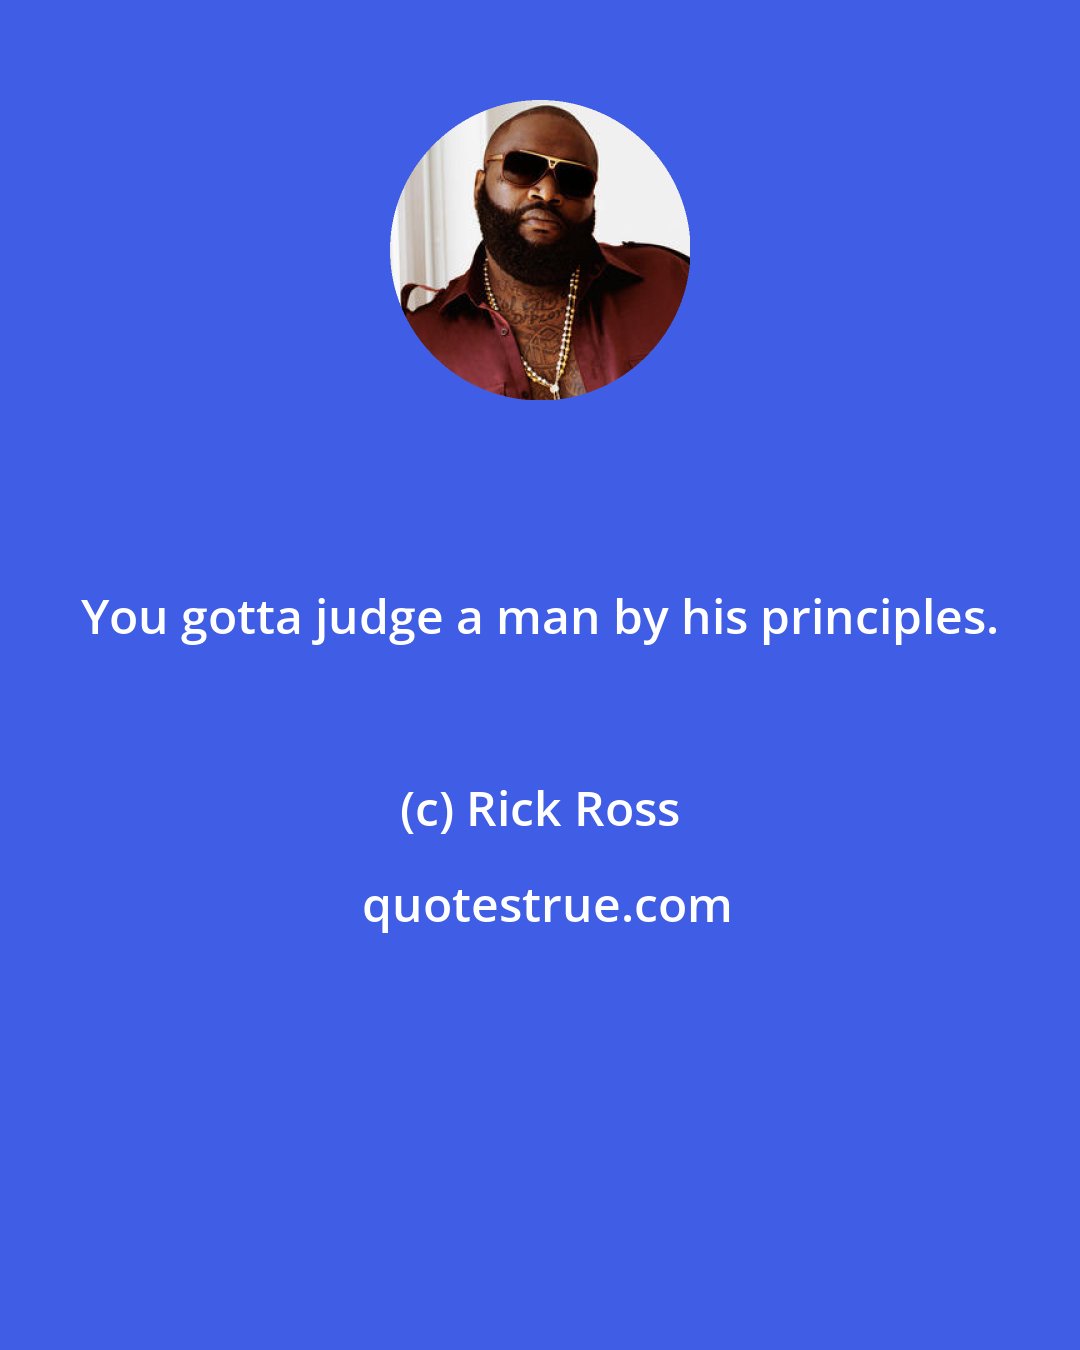 Rick Ross: You gotta judge a man by his principles.